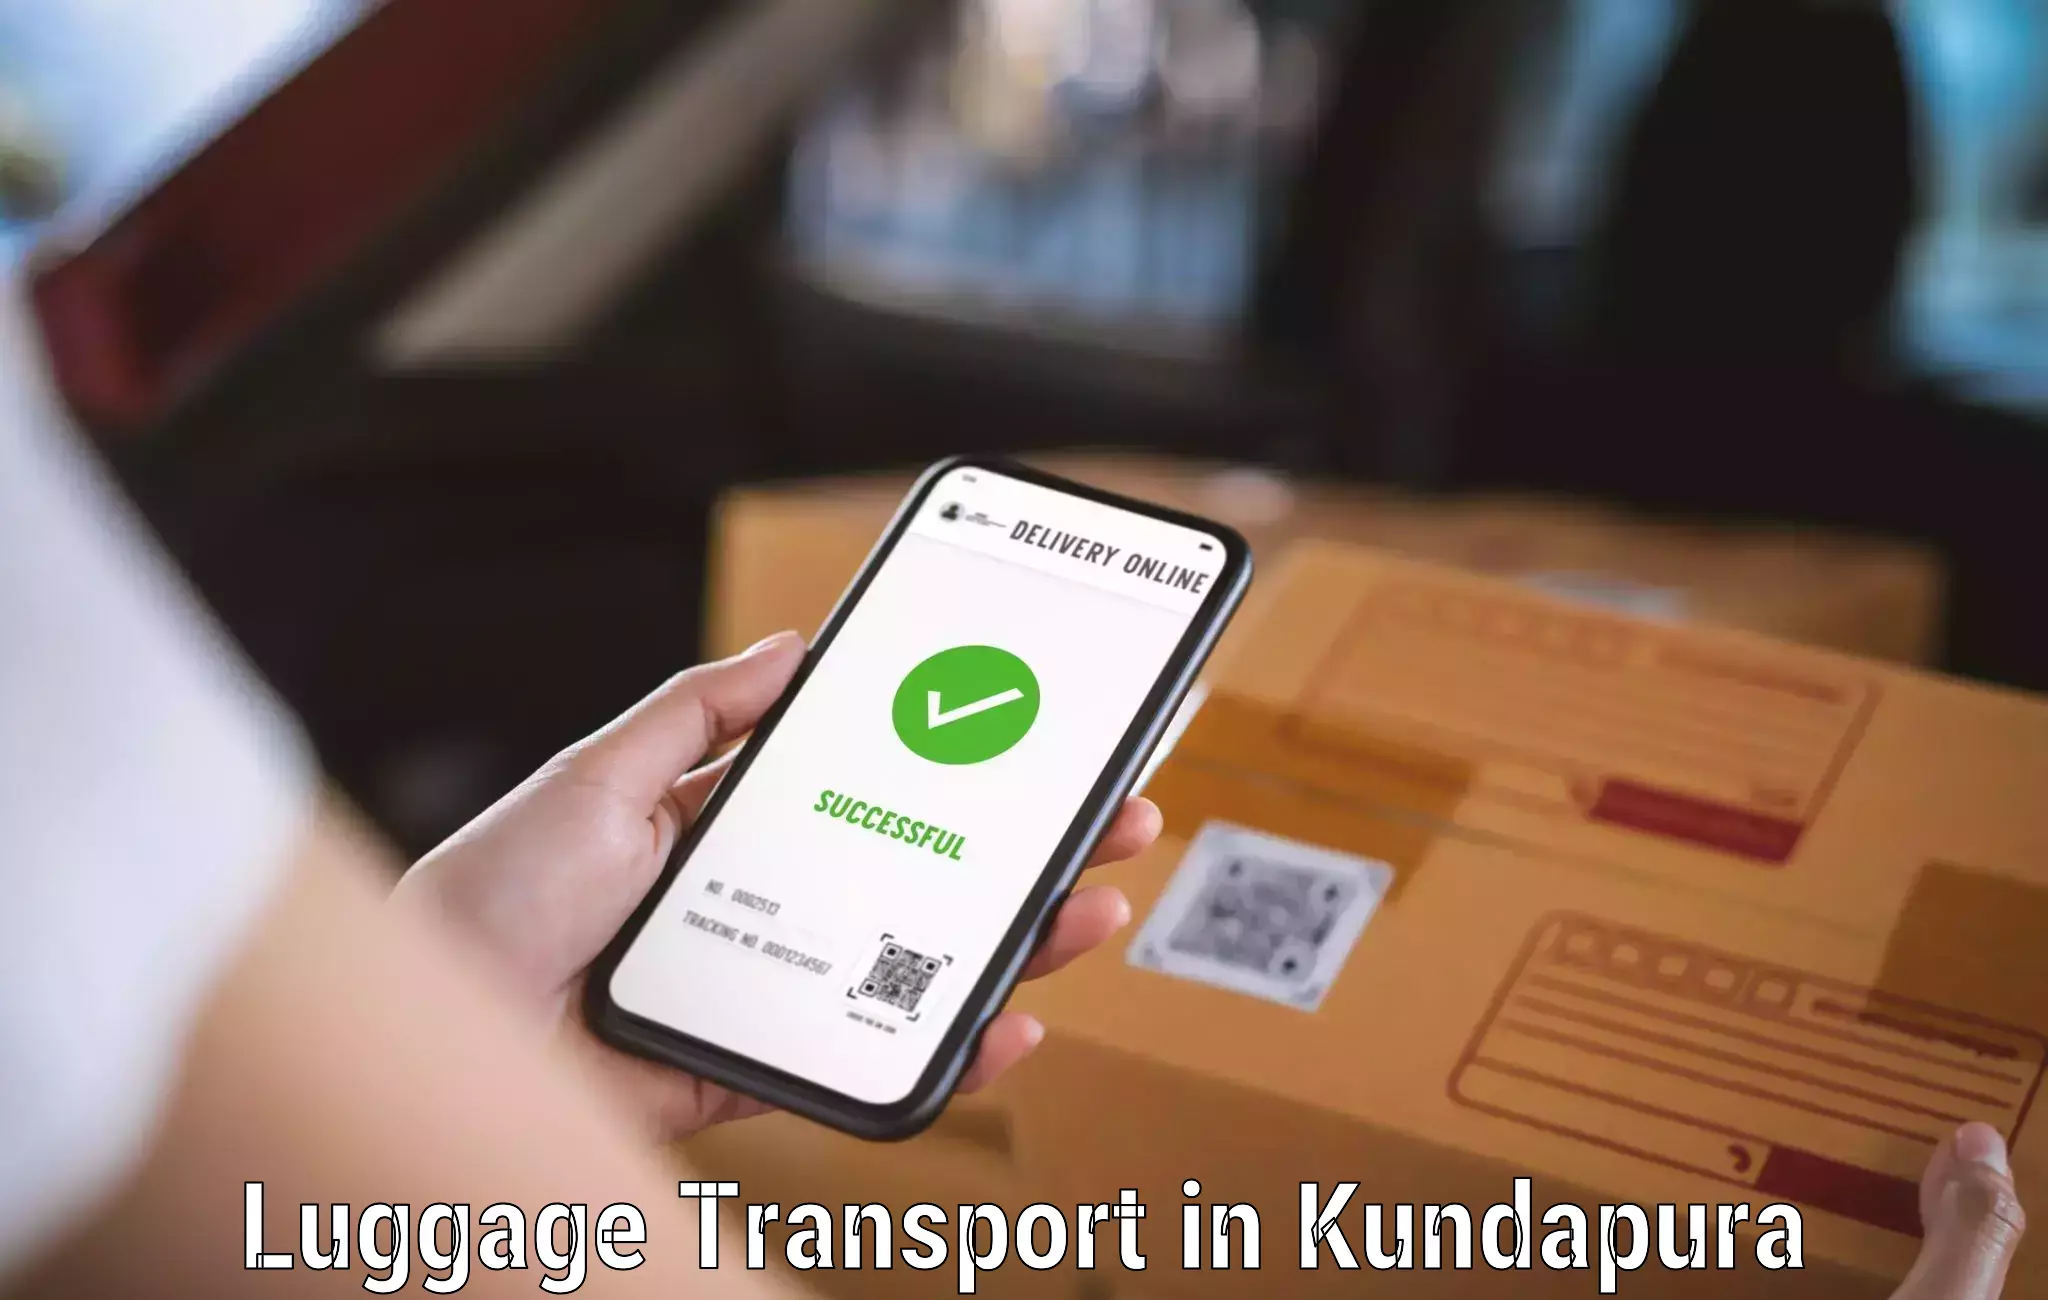 Luggage transport consulting in Kundapura